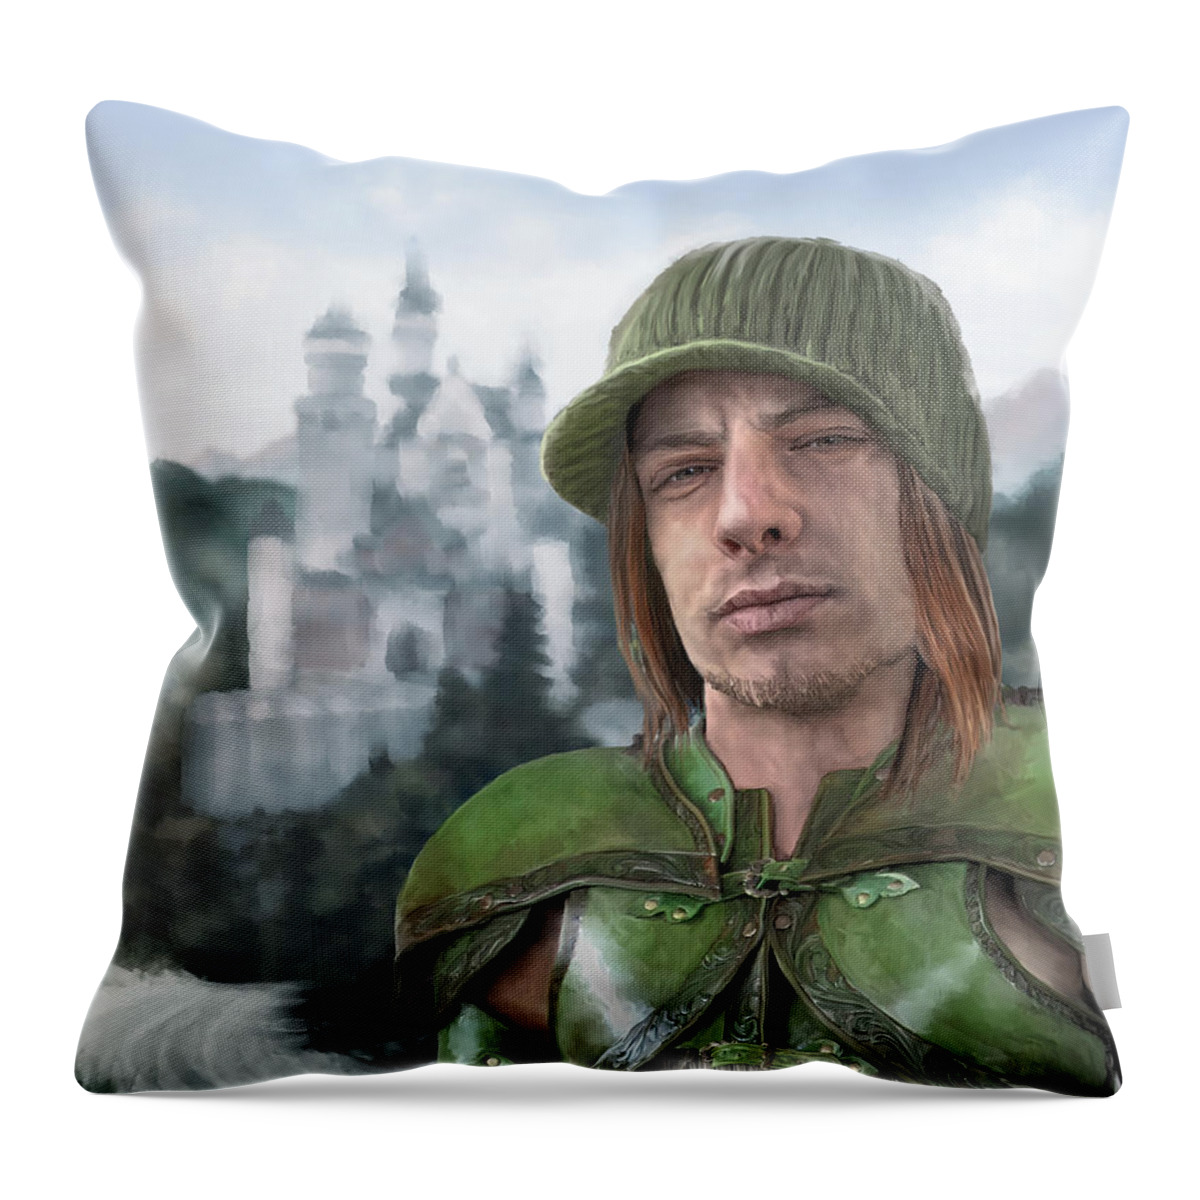 Portrait Throw Pillow featuring the digital art Modern Elf by Rick Mosher